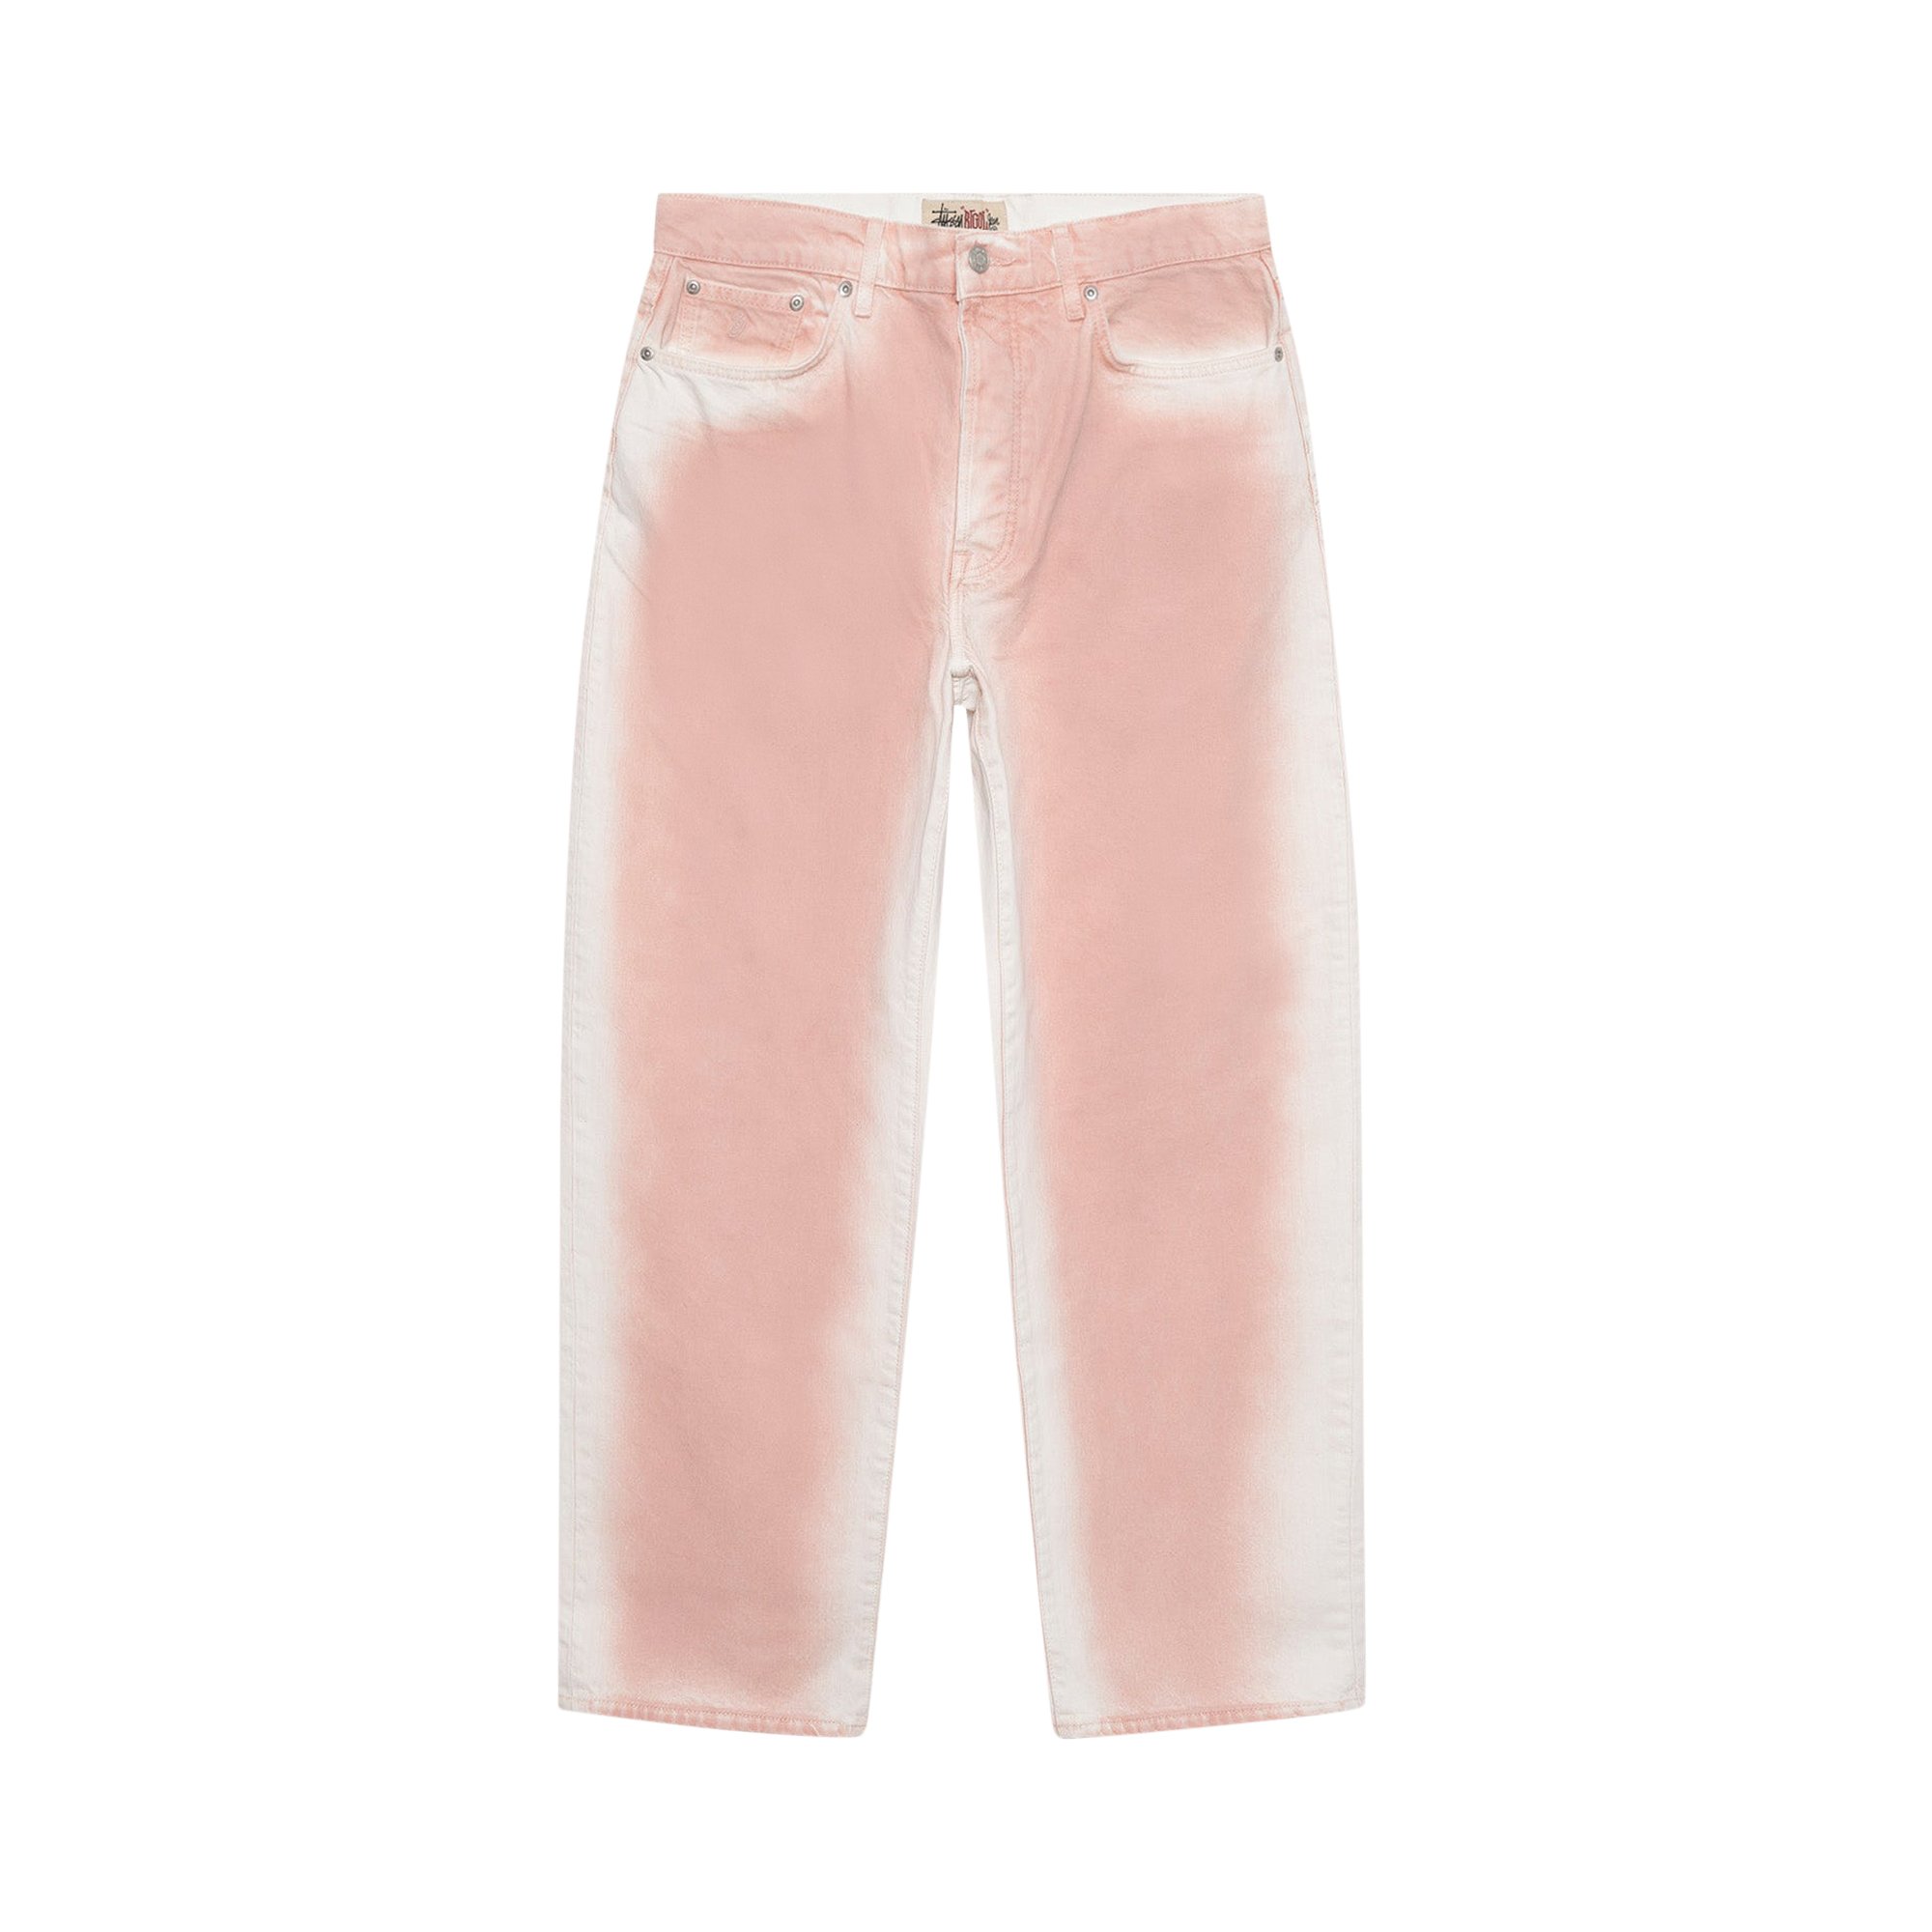 Stussy Spray Dye Big Ol' Jeans 'Faded Pink' | GOAT